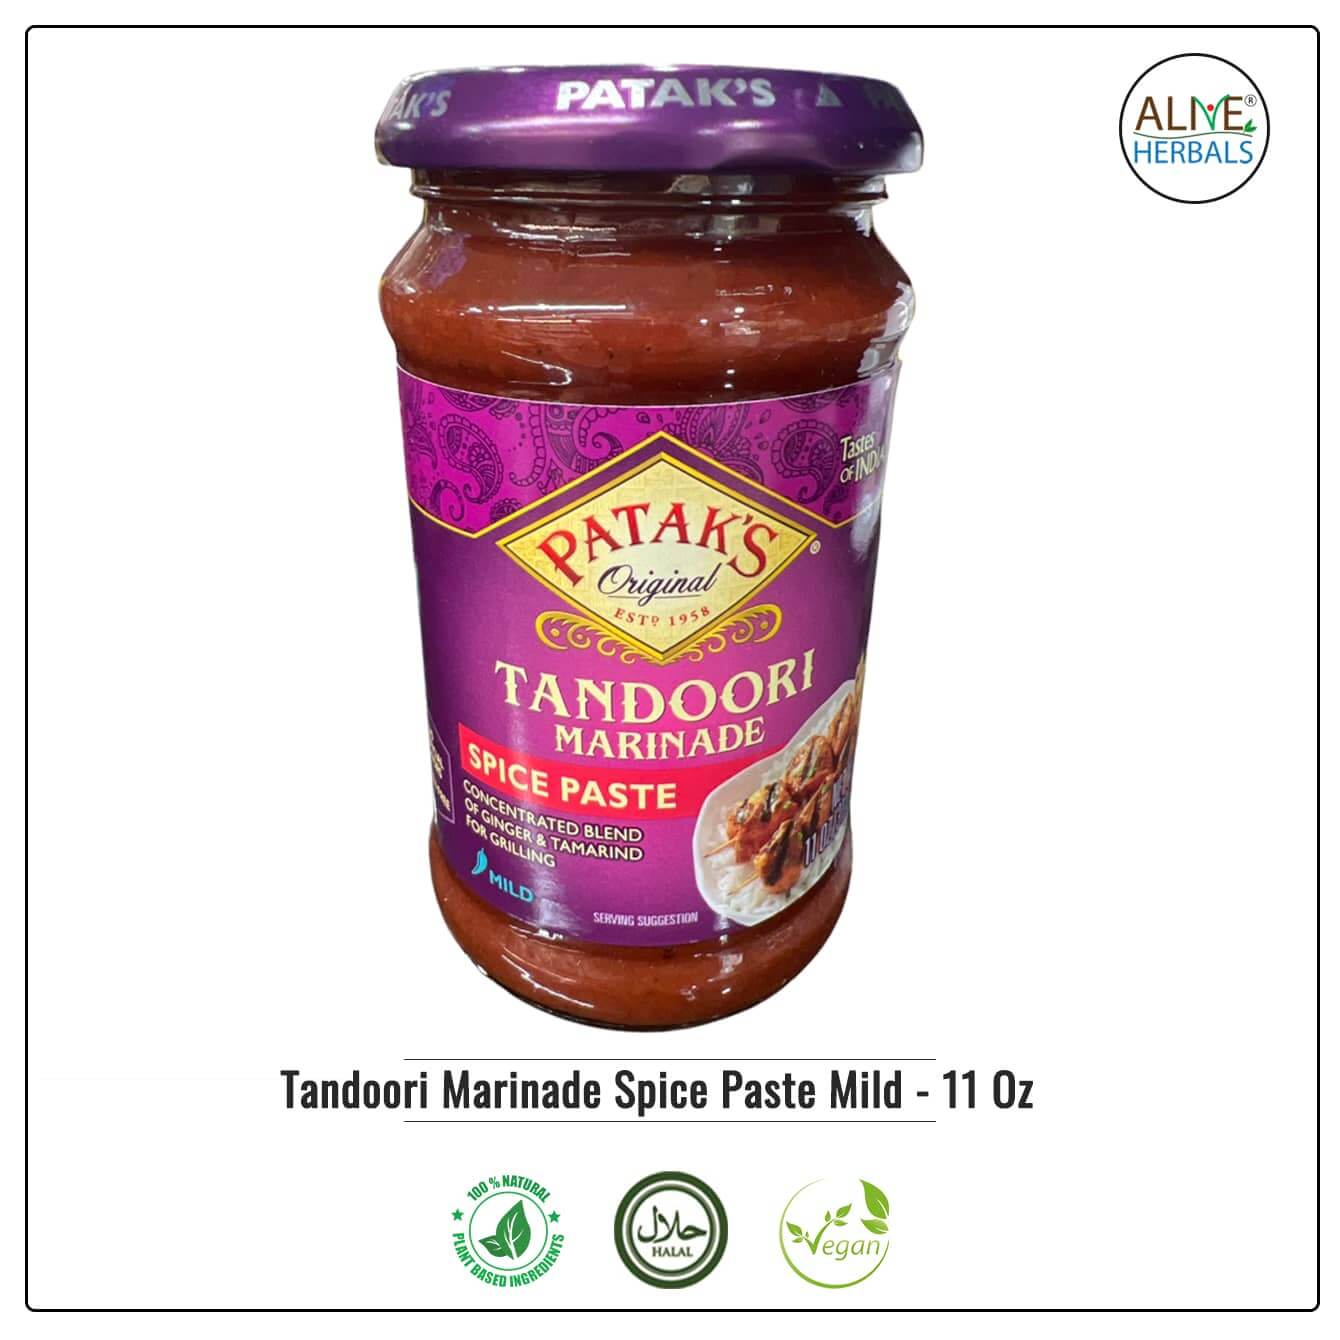 Tandoori Marinade Spice Paste Mild - Alive Herbals